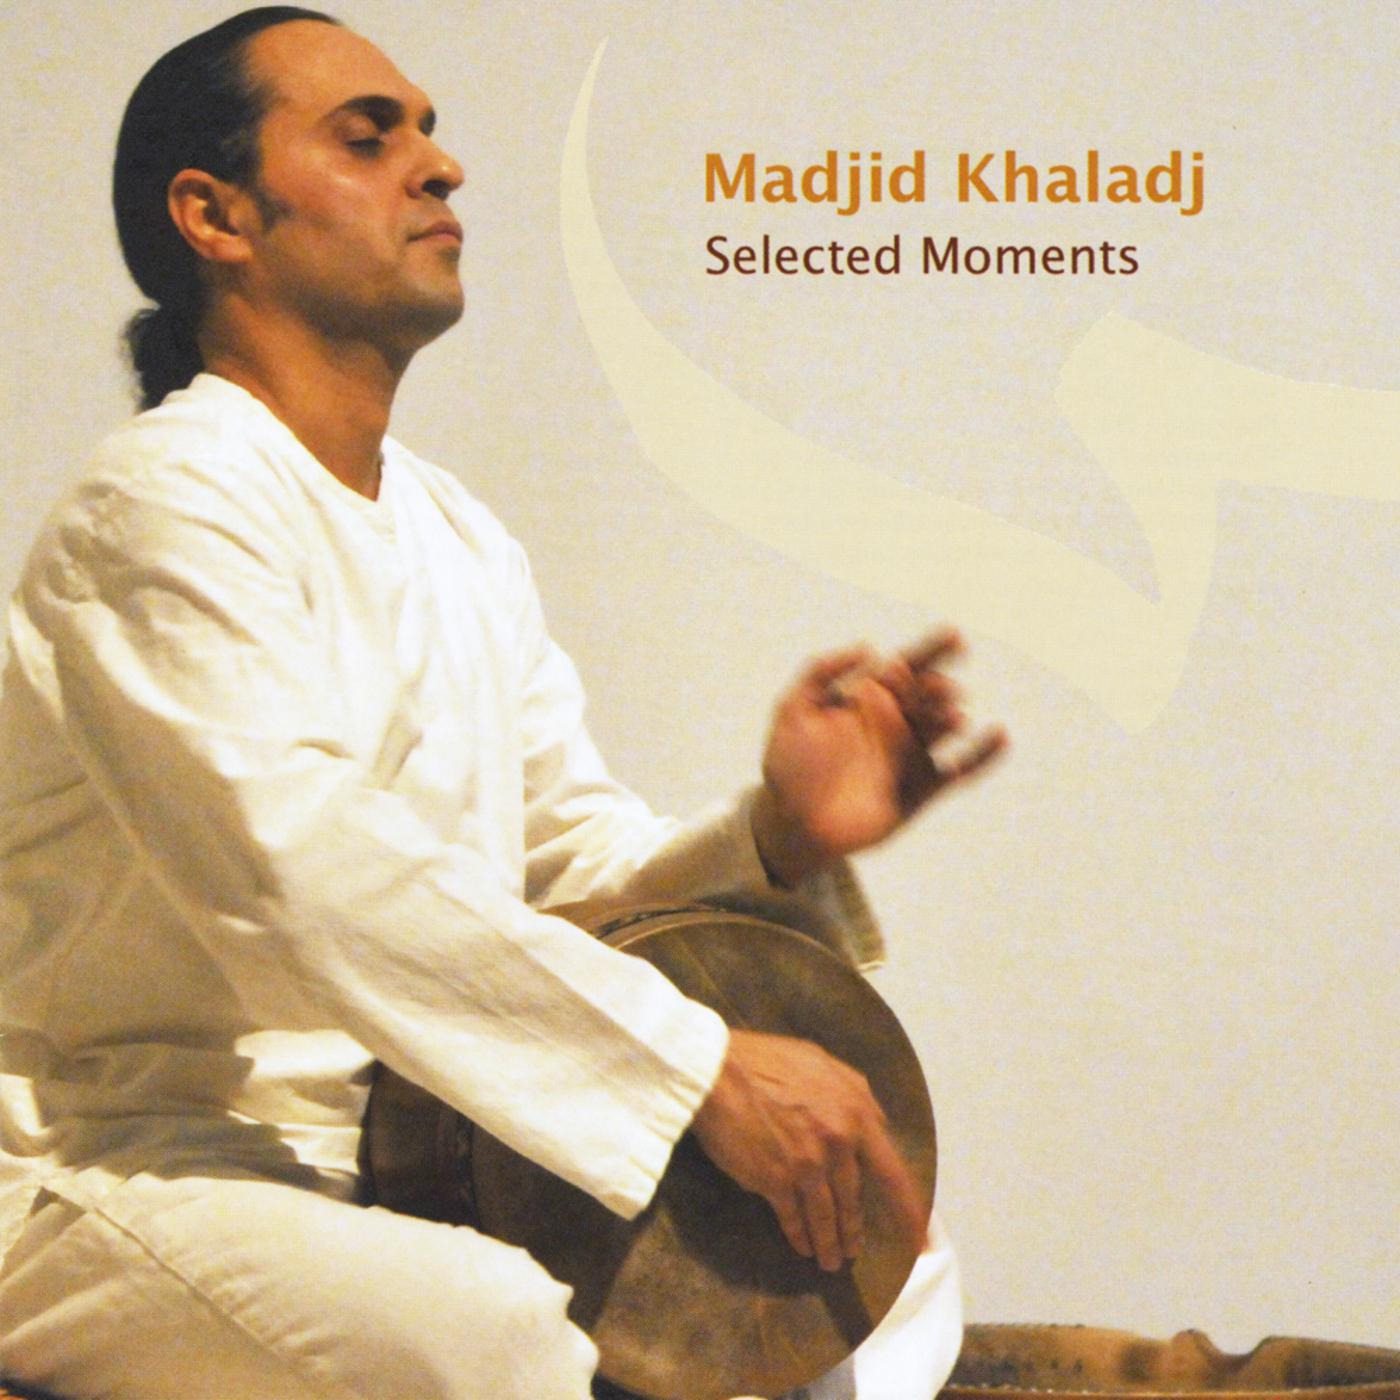 Madjid Khaladj - Pulses of Life